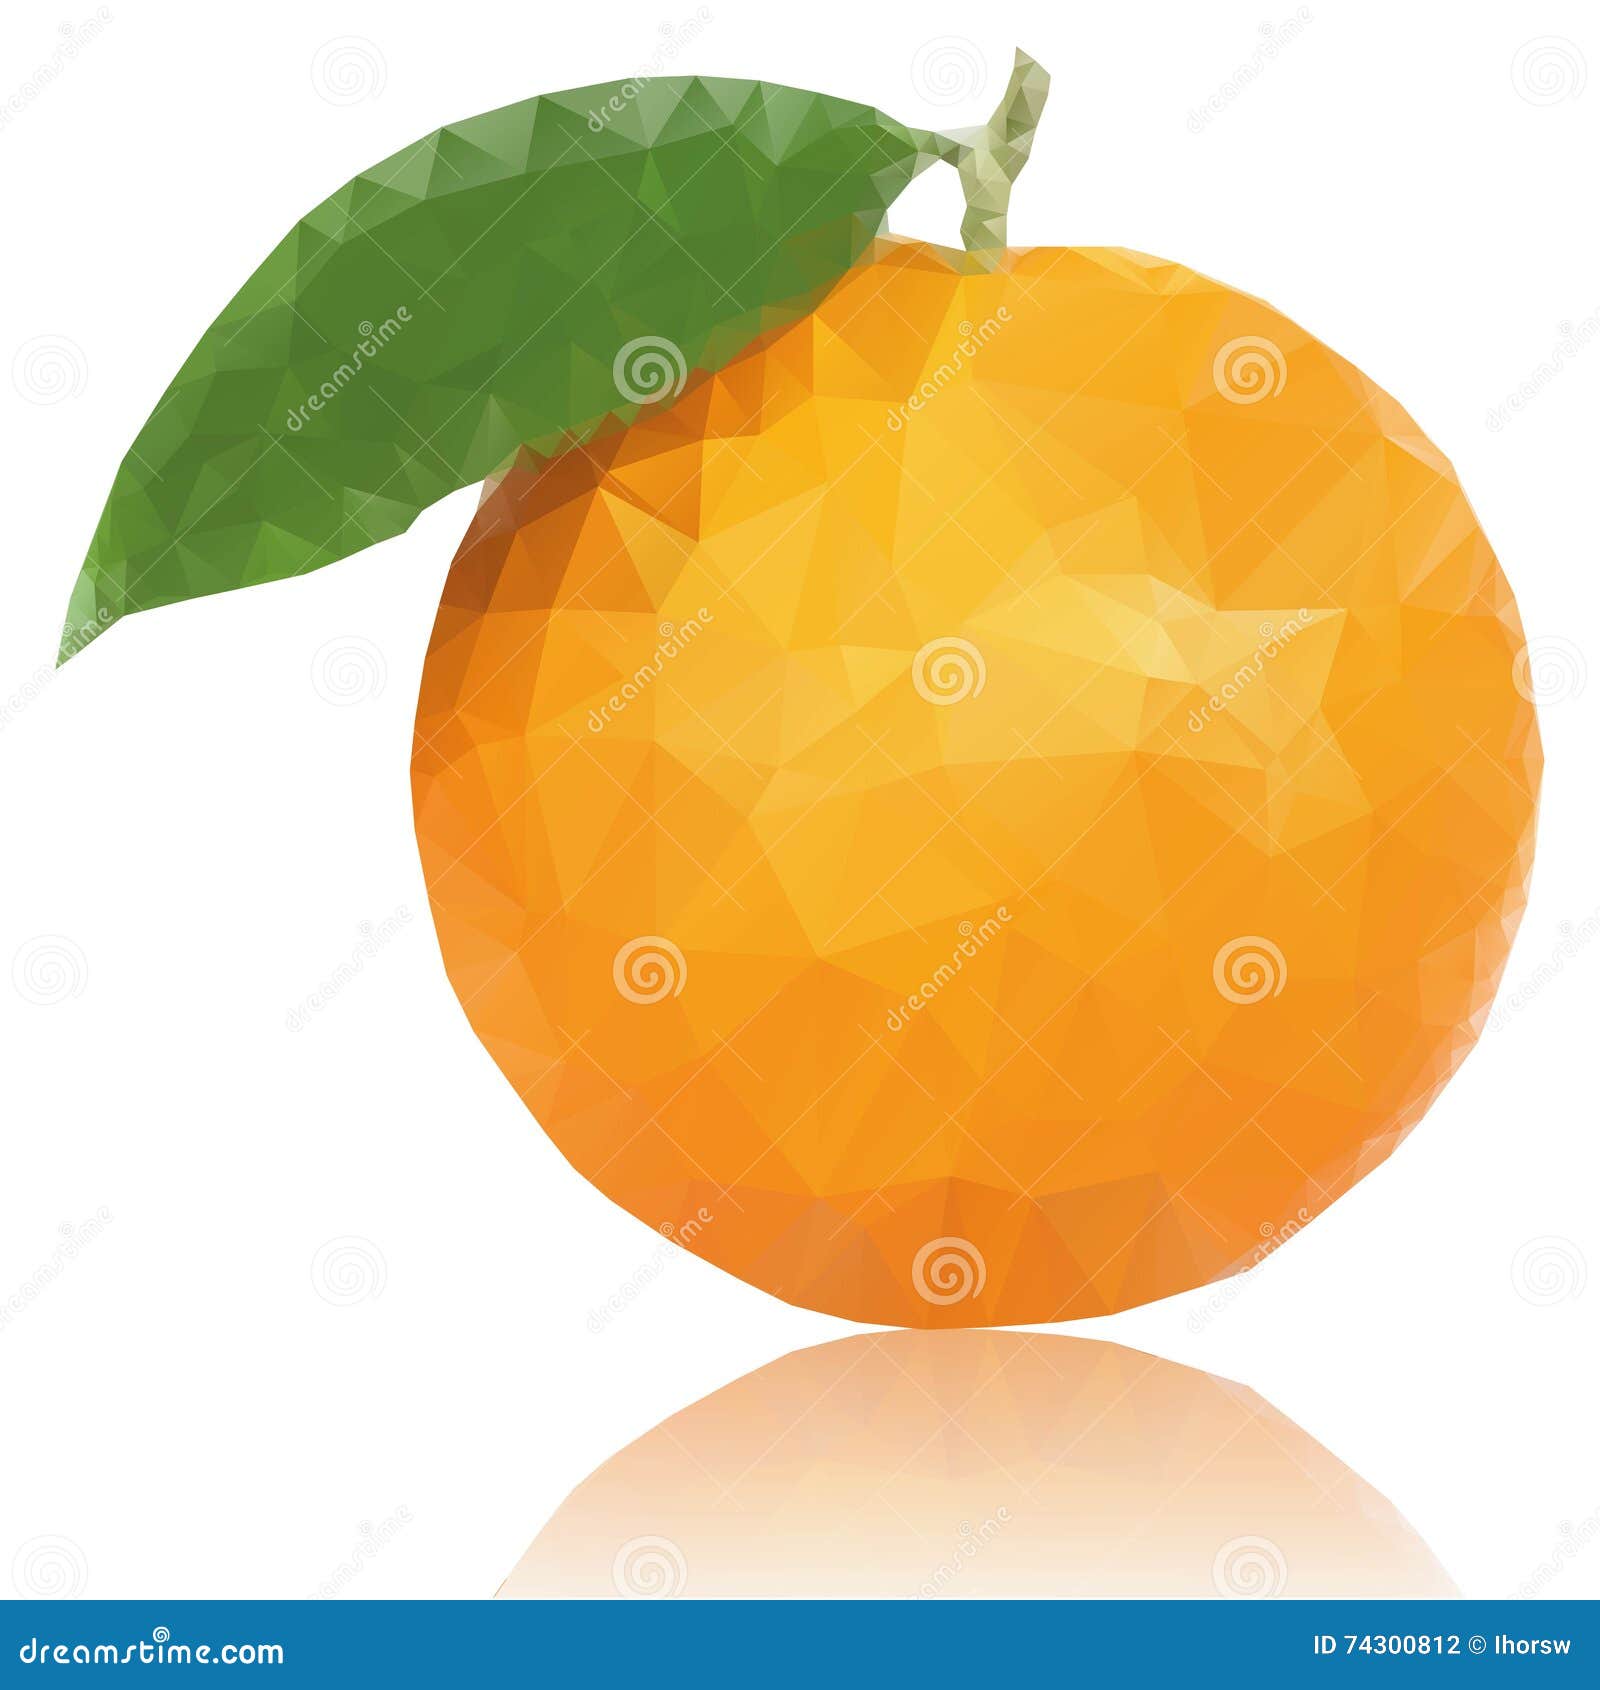 realistic unusual polygonal red orange fruit. modern ve stock